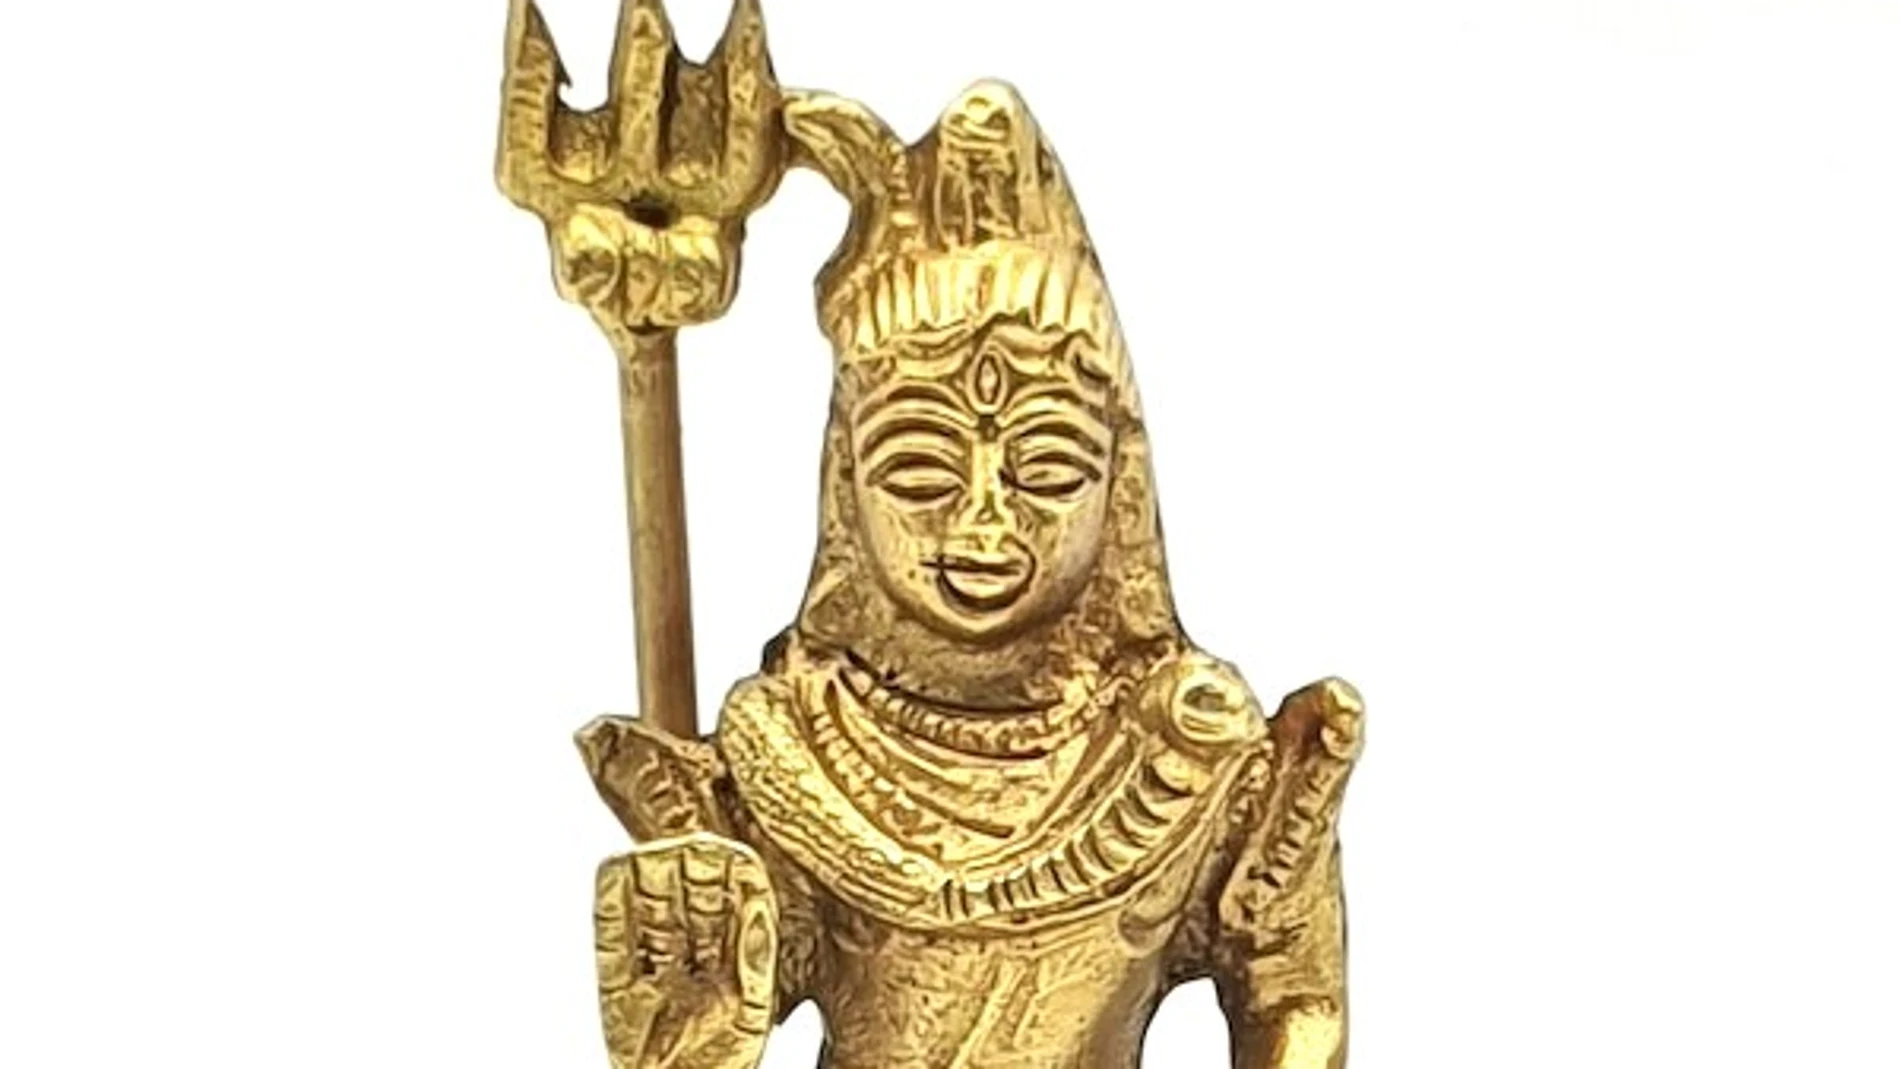 Un ejemplo de estatua de bronce del Dios hindú Shiva 